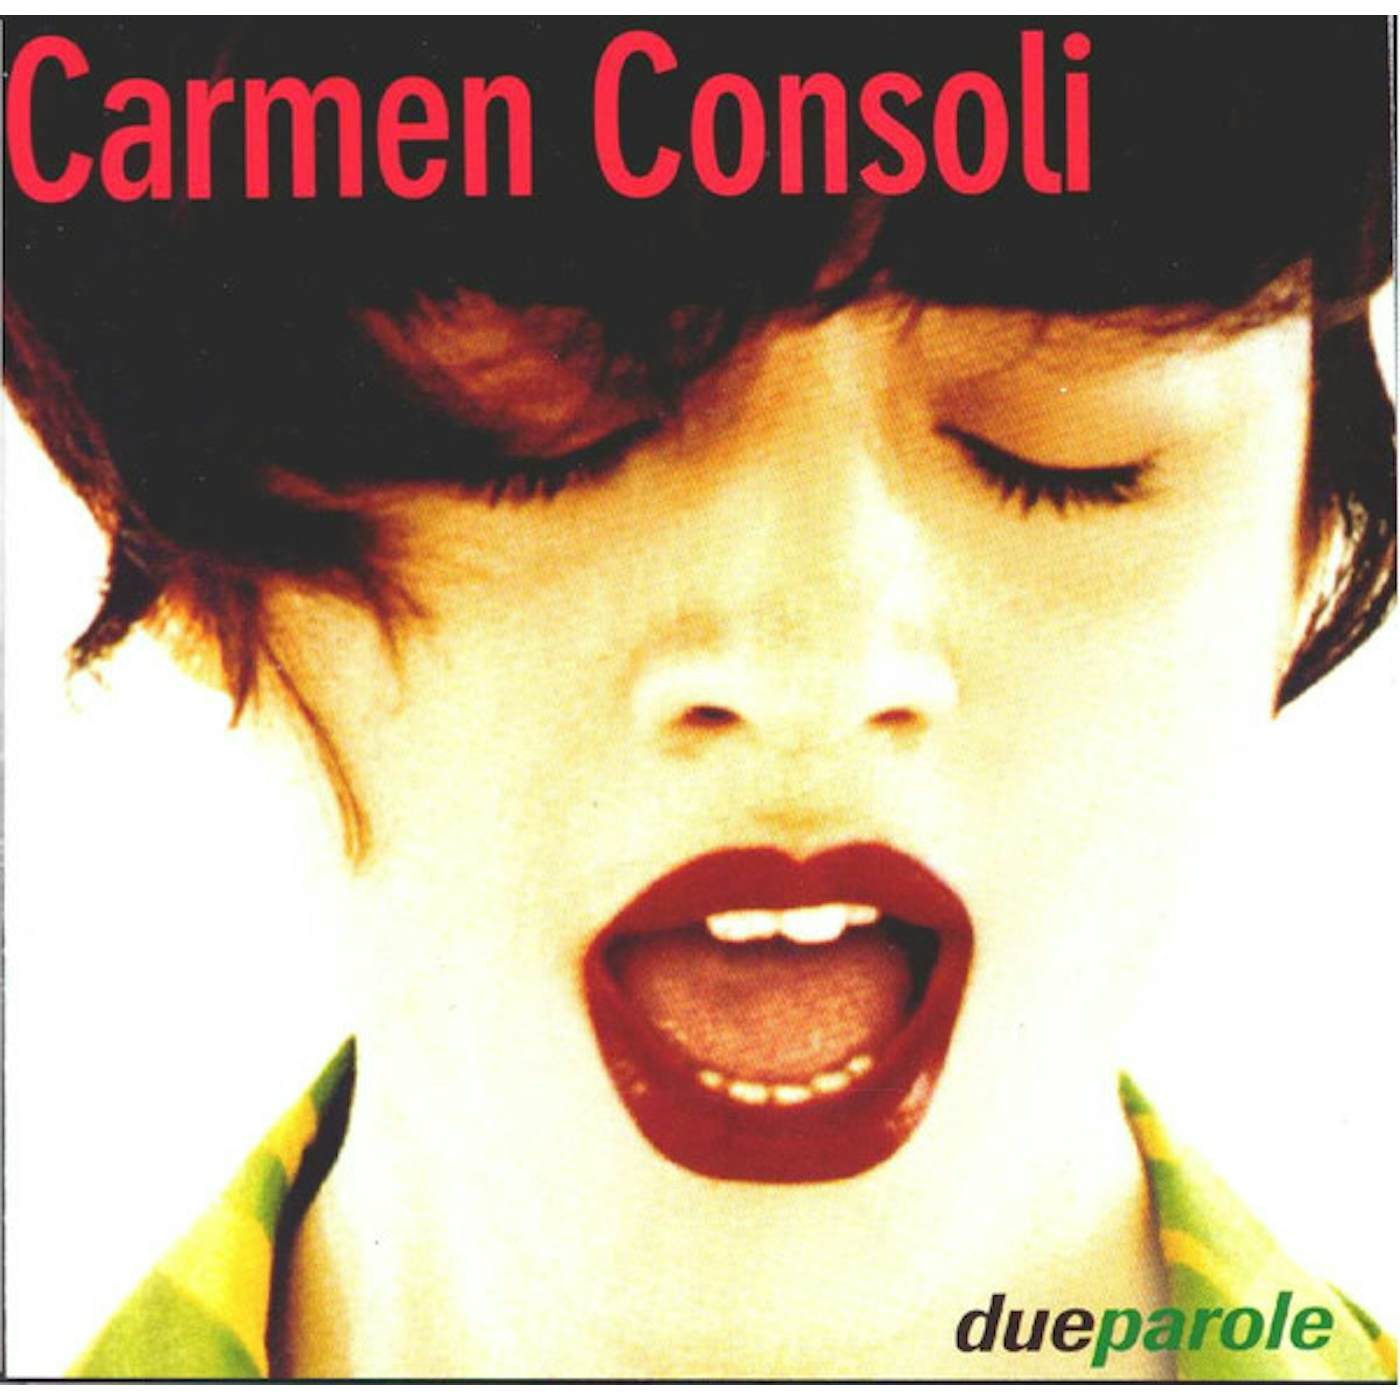 Carmen Consoli Due Parole Vinyl Record